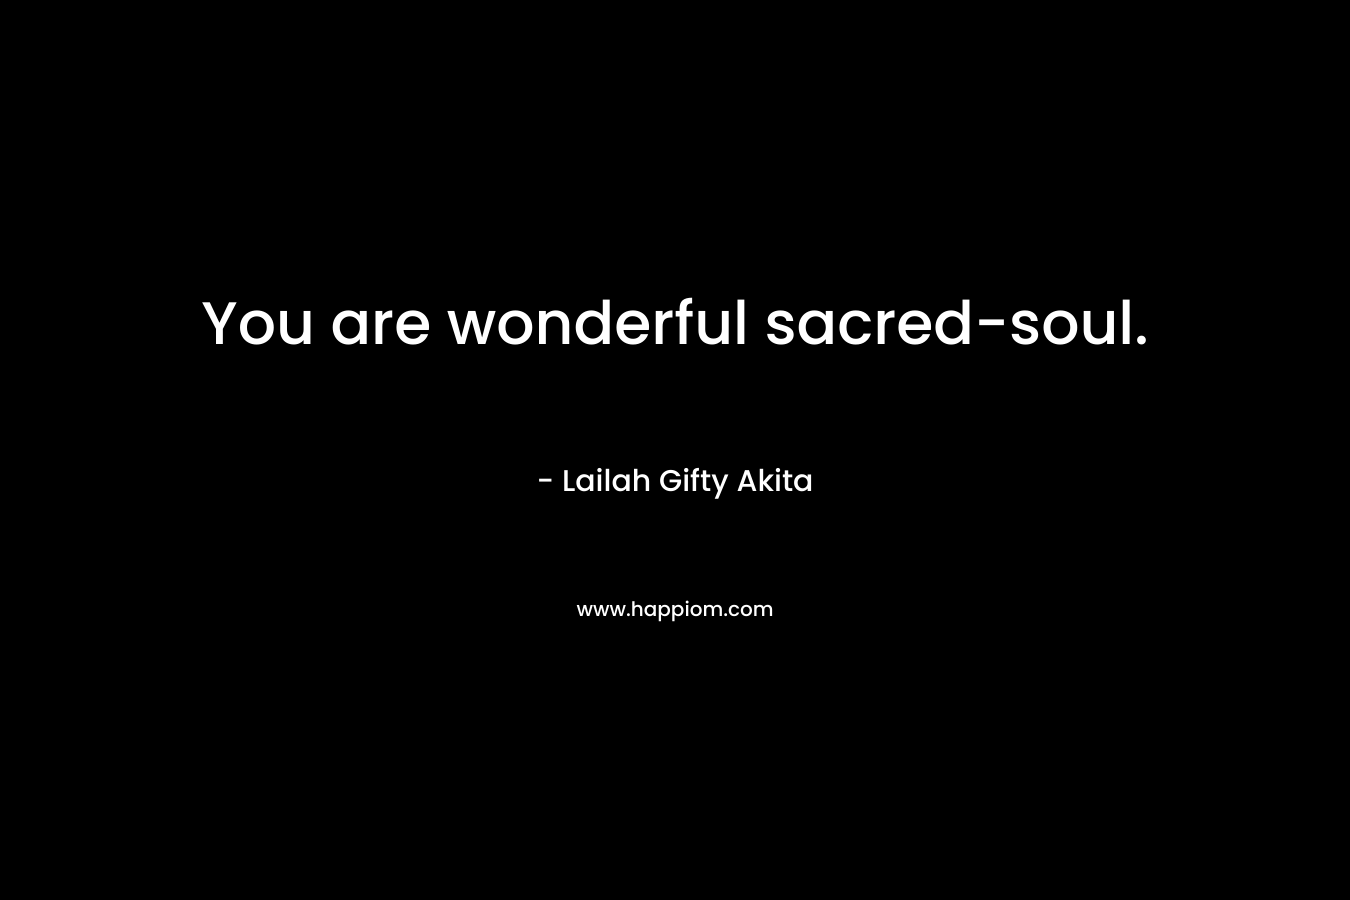 You are wonderful sacred-soul.